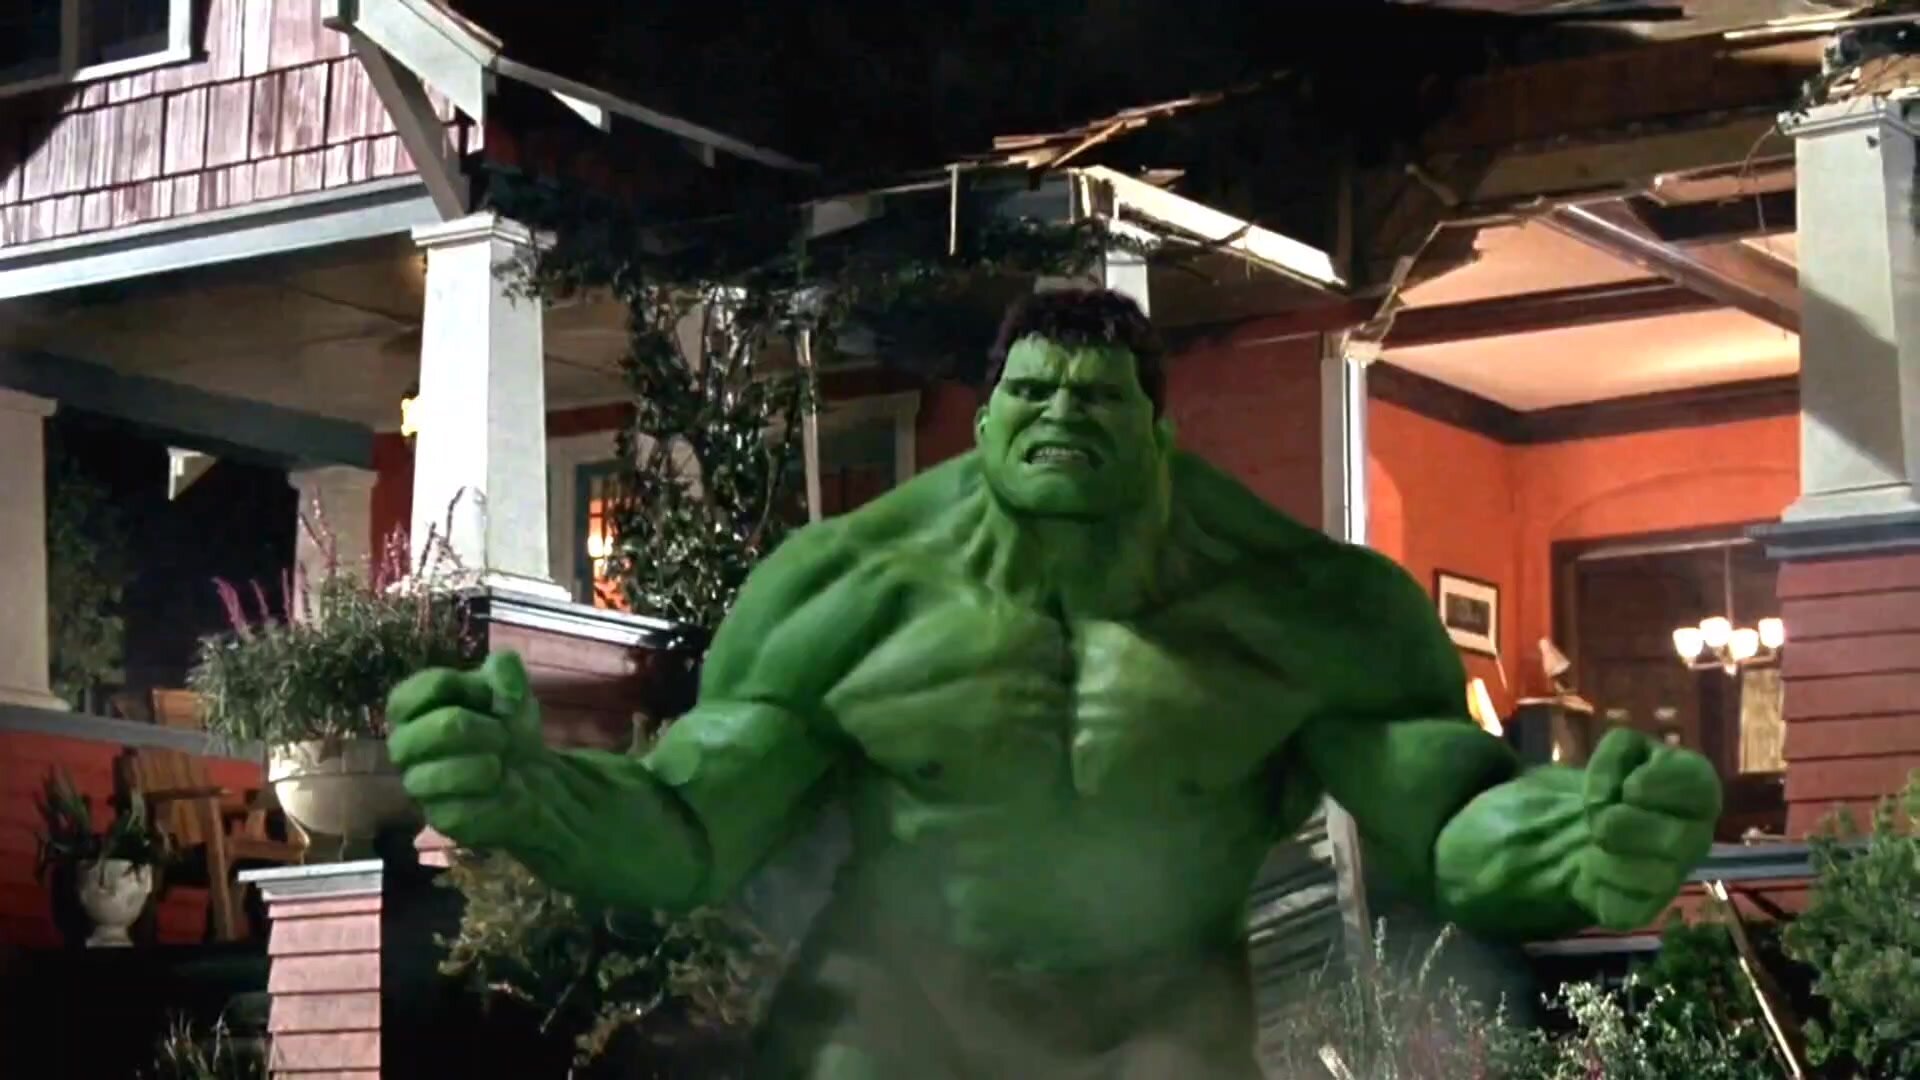 Growing giant/muscle growth: Hulk Growthâ€¦ ThisVid.com